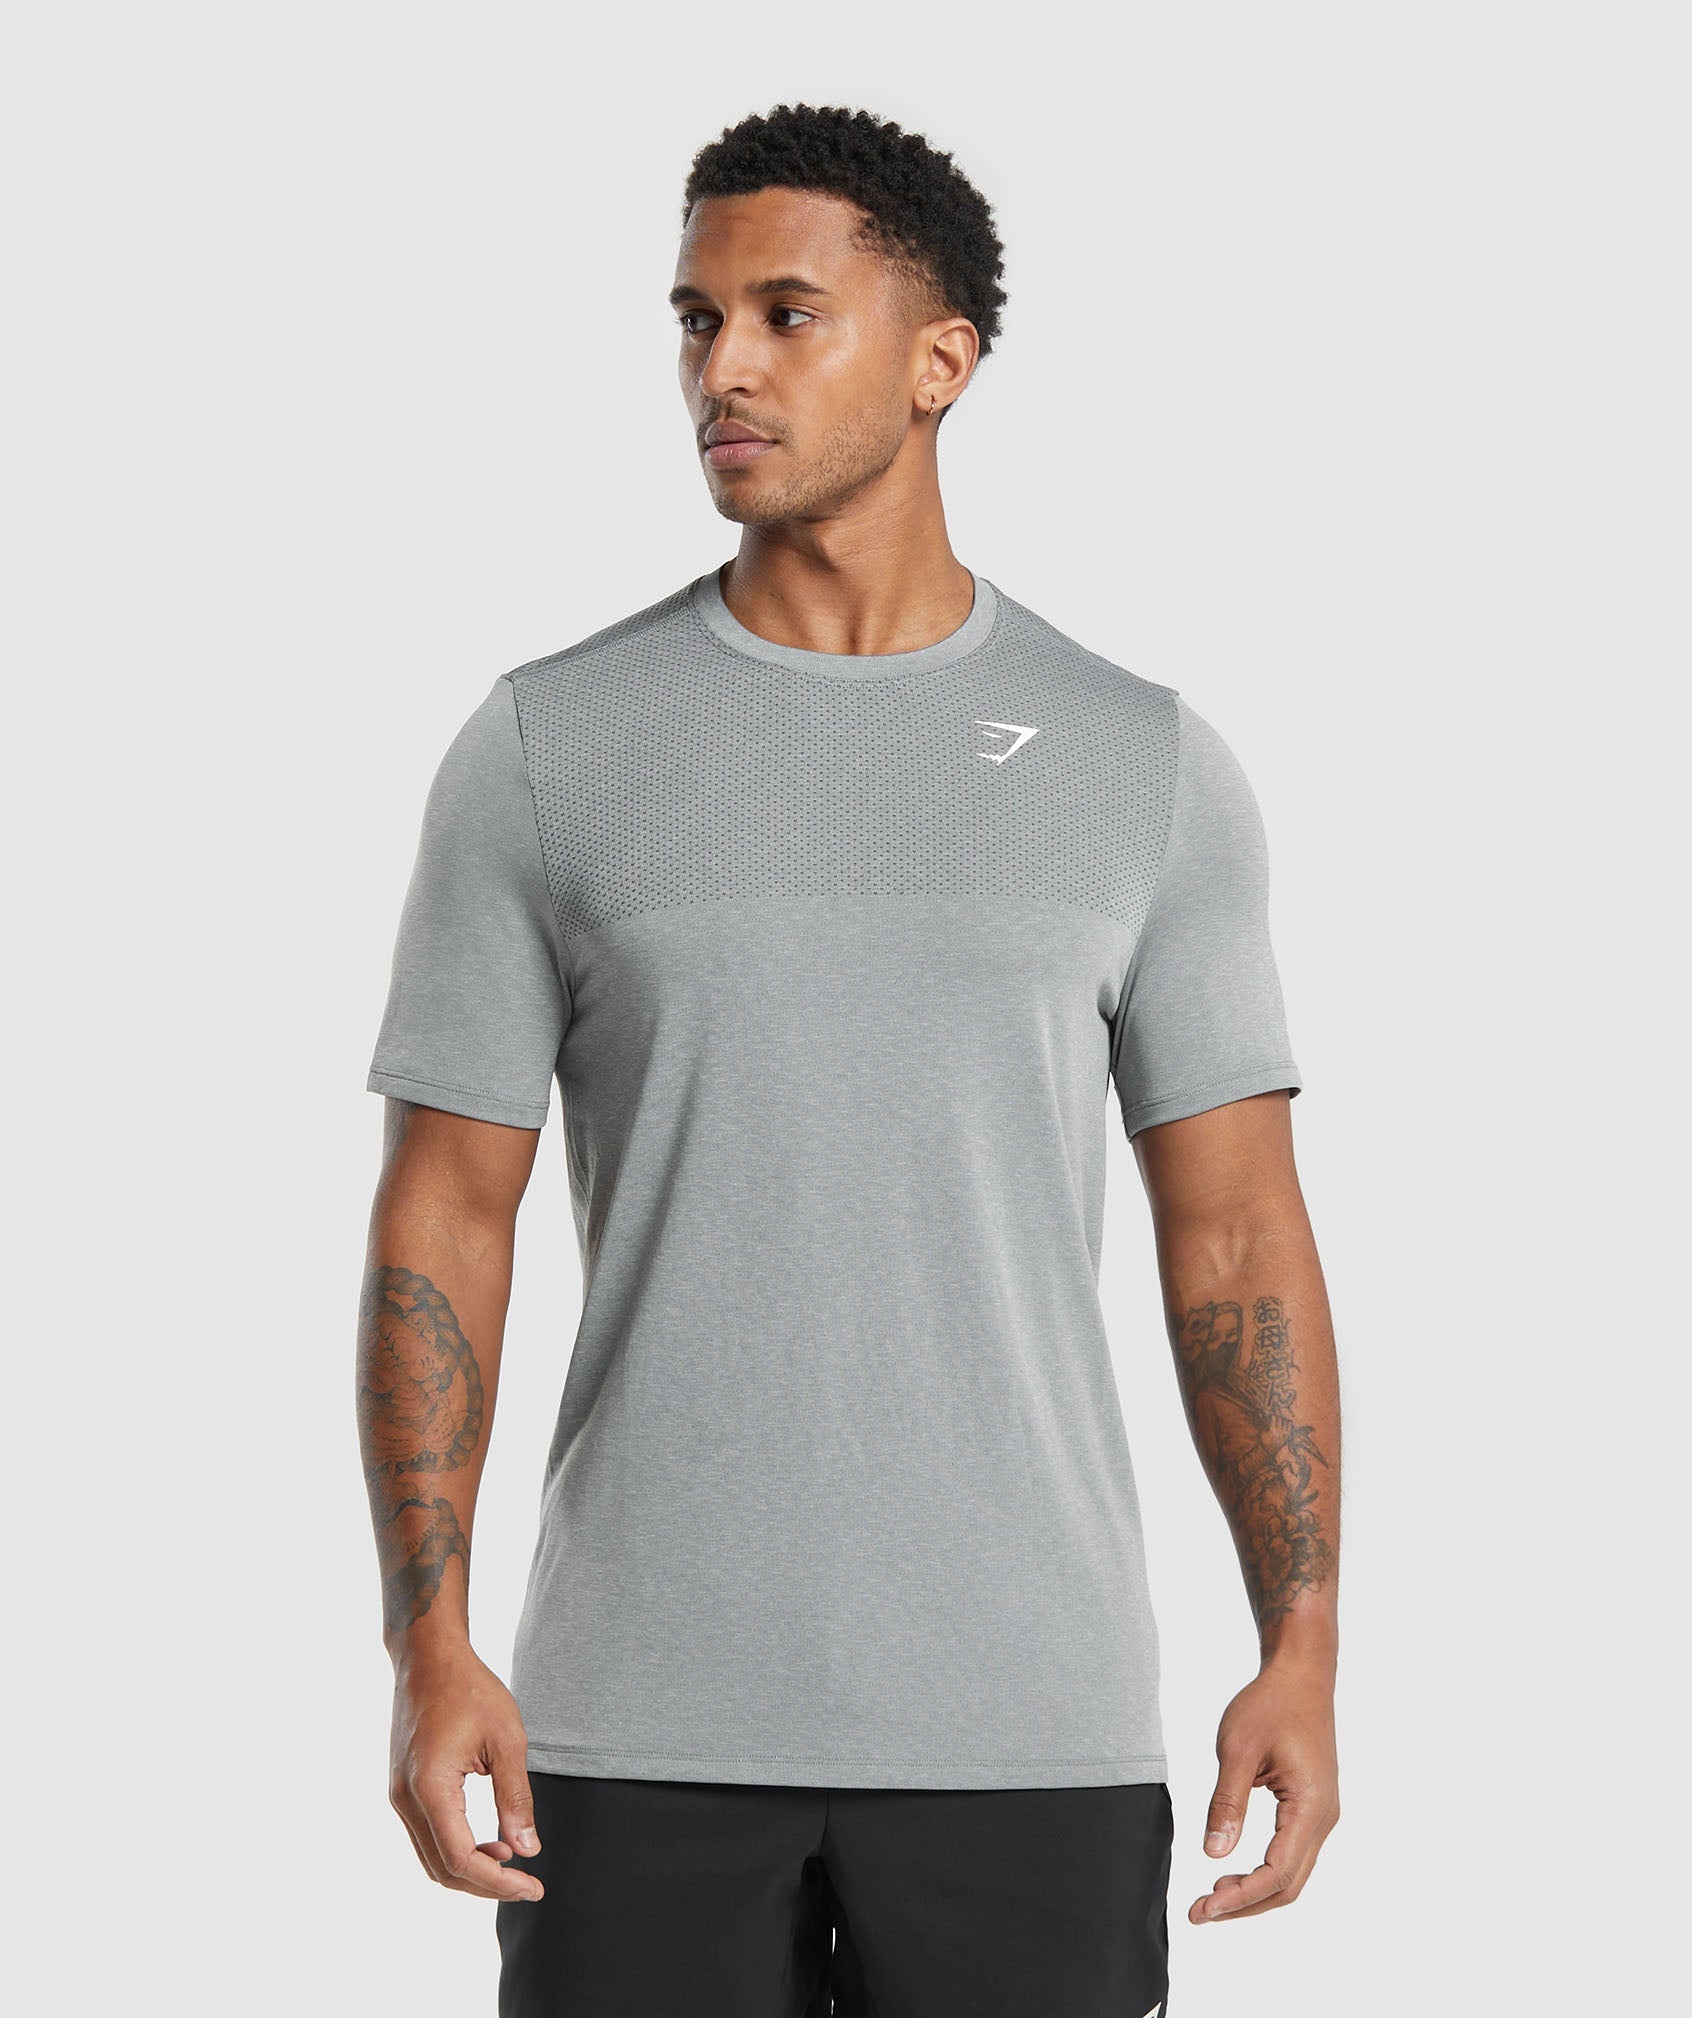 Gymshark Vital Seamless T-Shirt - Light Grey/Black Marl | Gymshark